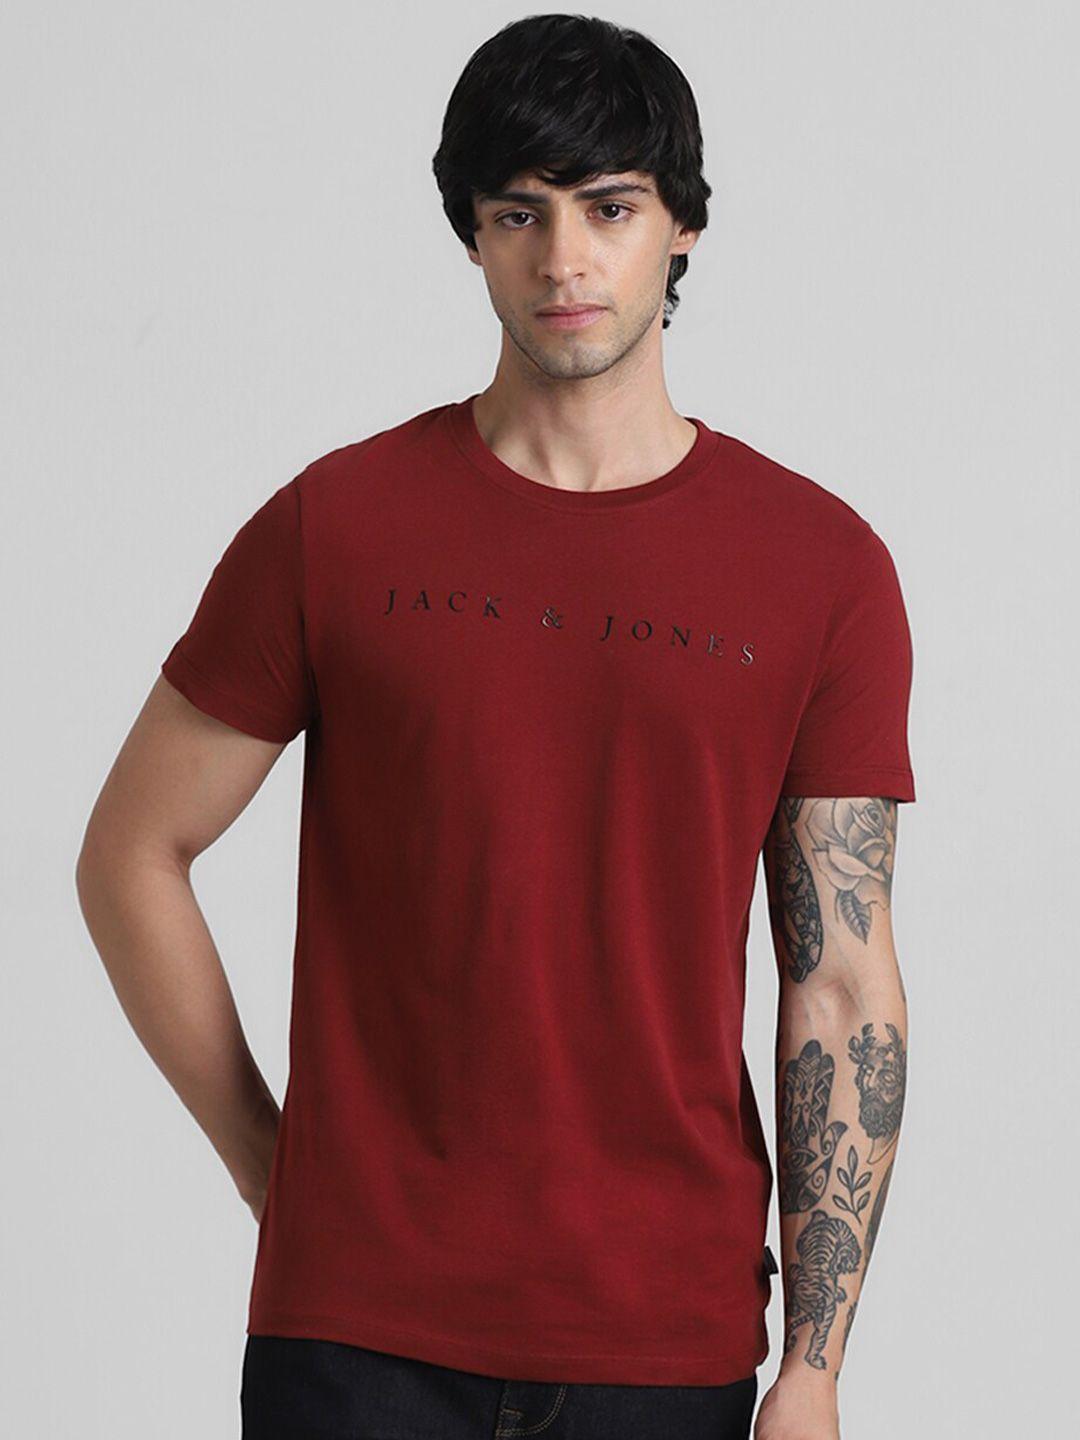 jack & jones brand logo printed cotton t-shirt